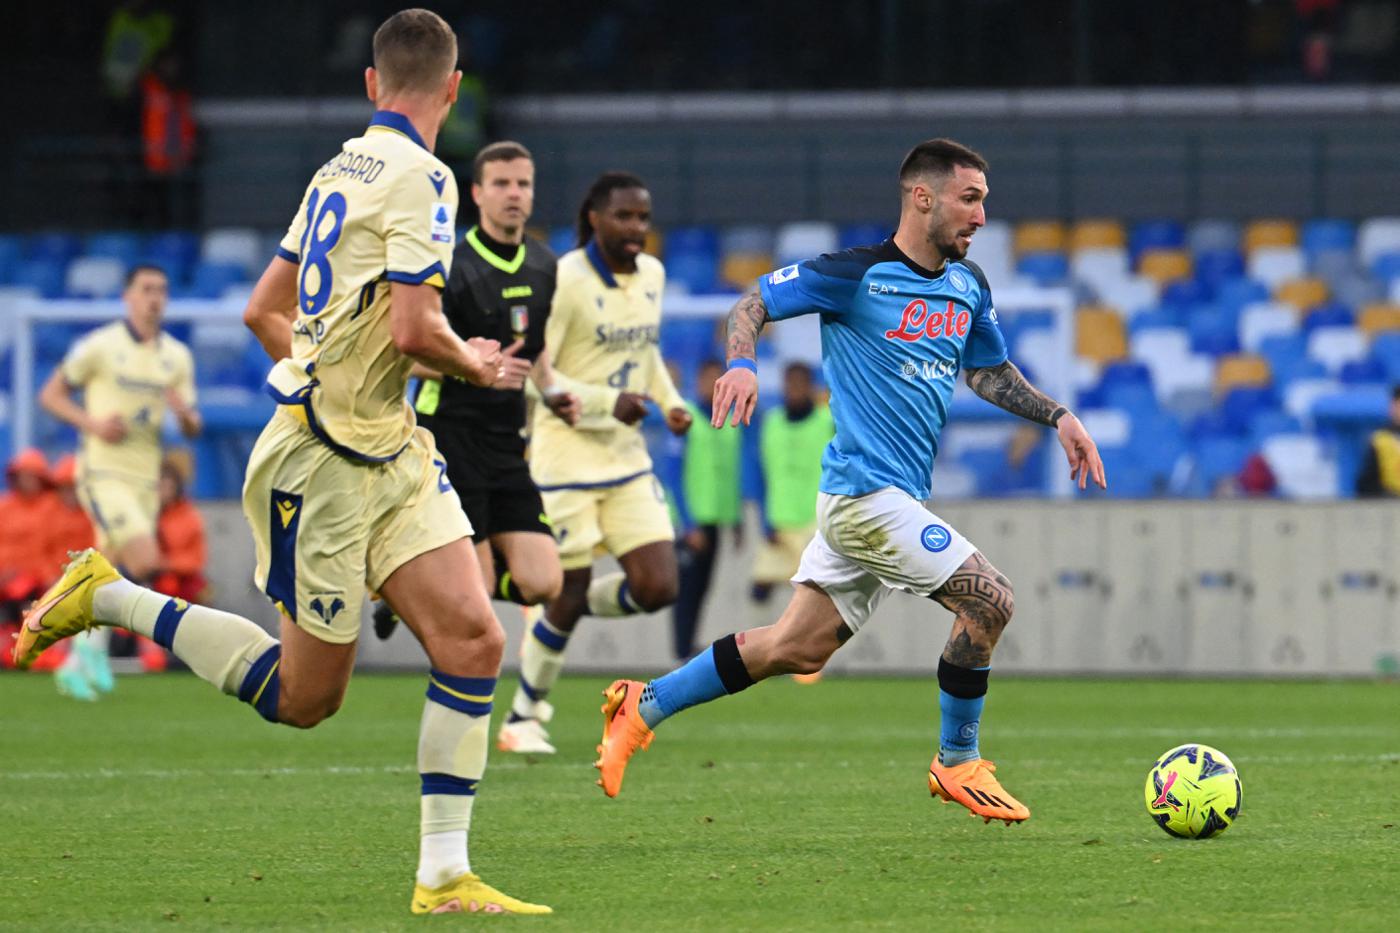 Napoli - Verona - 0:0. Italian Championship, 30th round. Match review, statistics